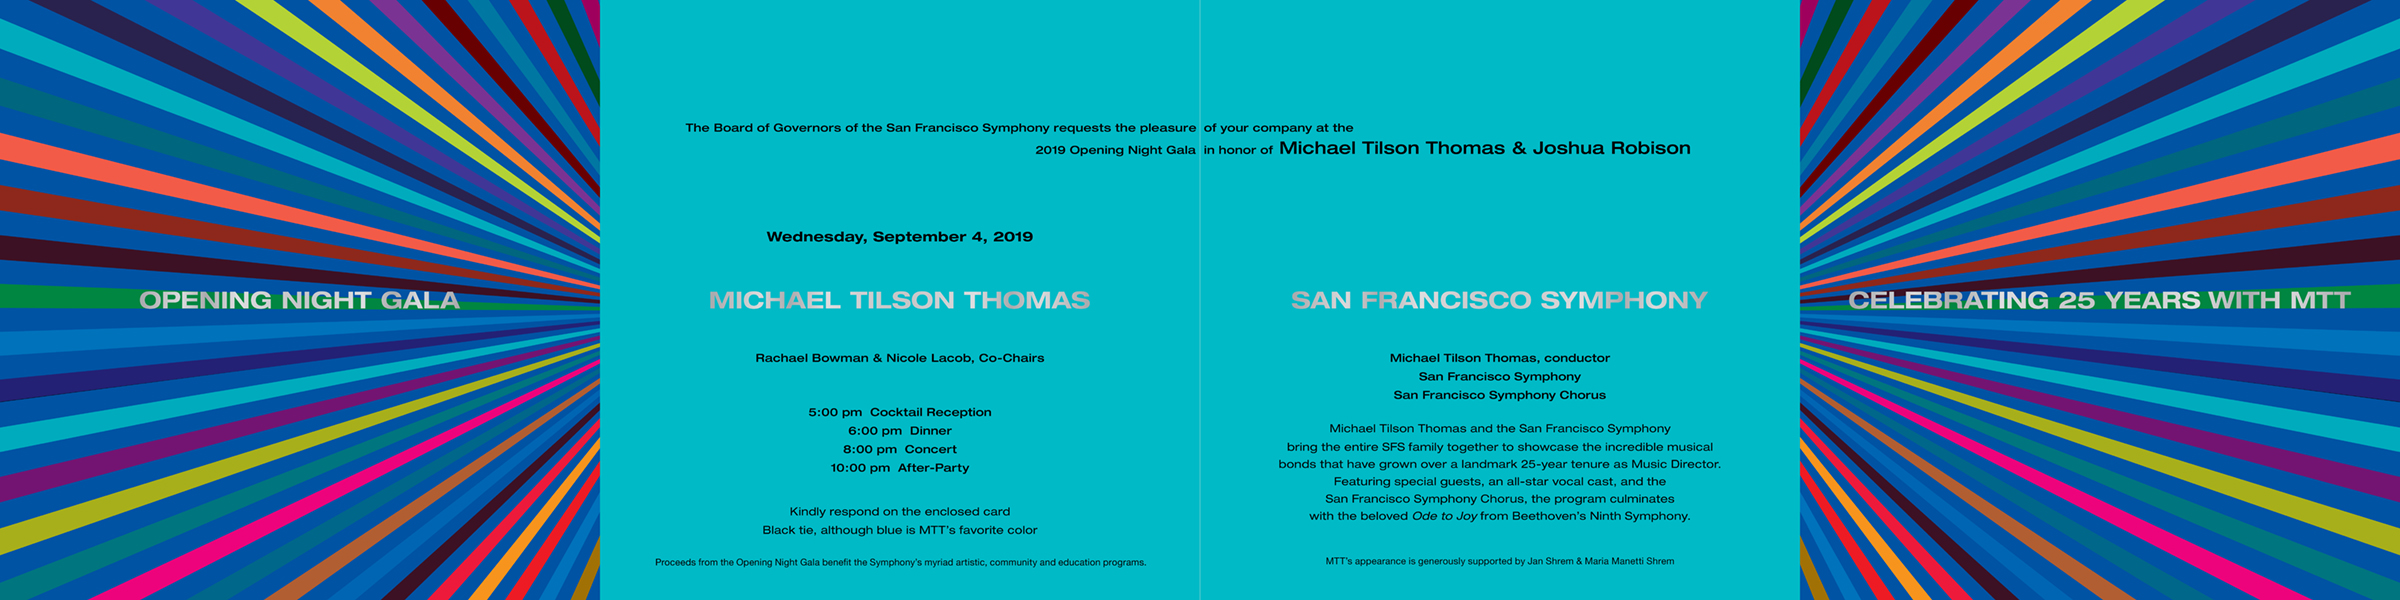 San Francisco Symphony Opening Night Gala 2019 invitation